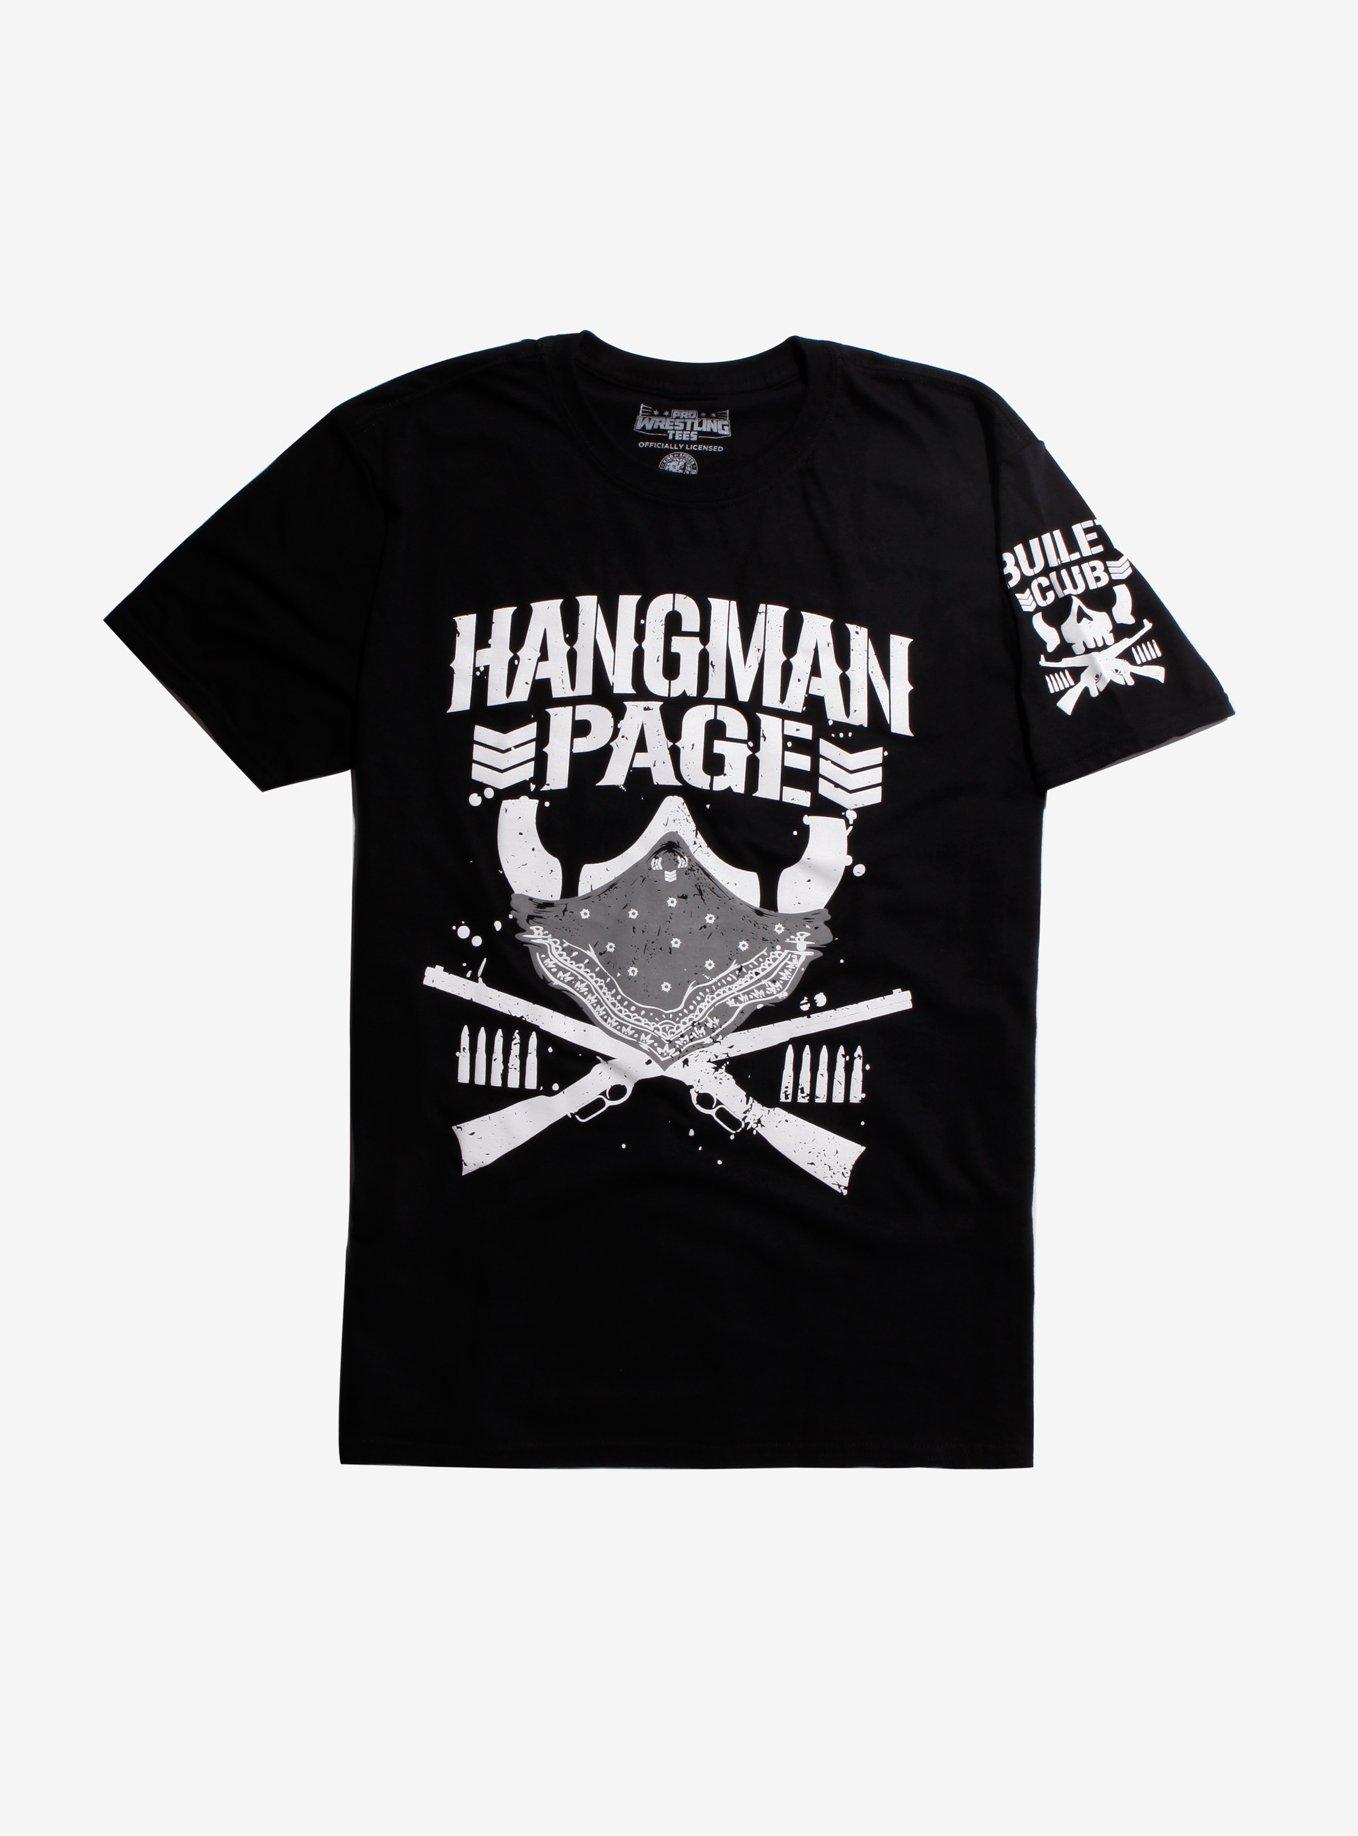 New Japan Pro-Wrestling Hangman Page Bandana T-Shirt Hot Topic Exclusive |  Hot Topic